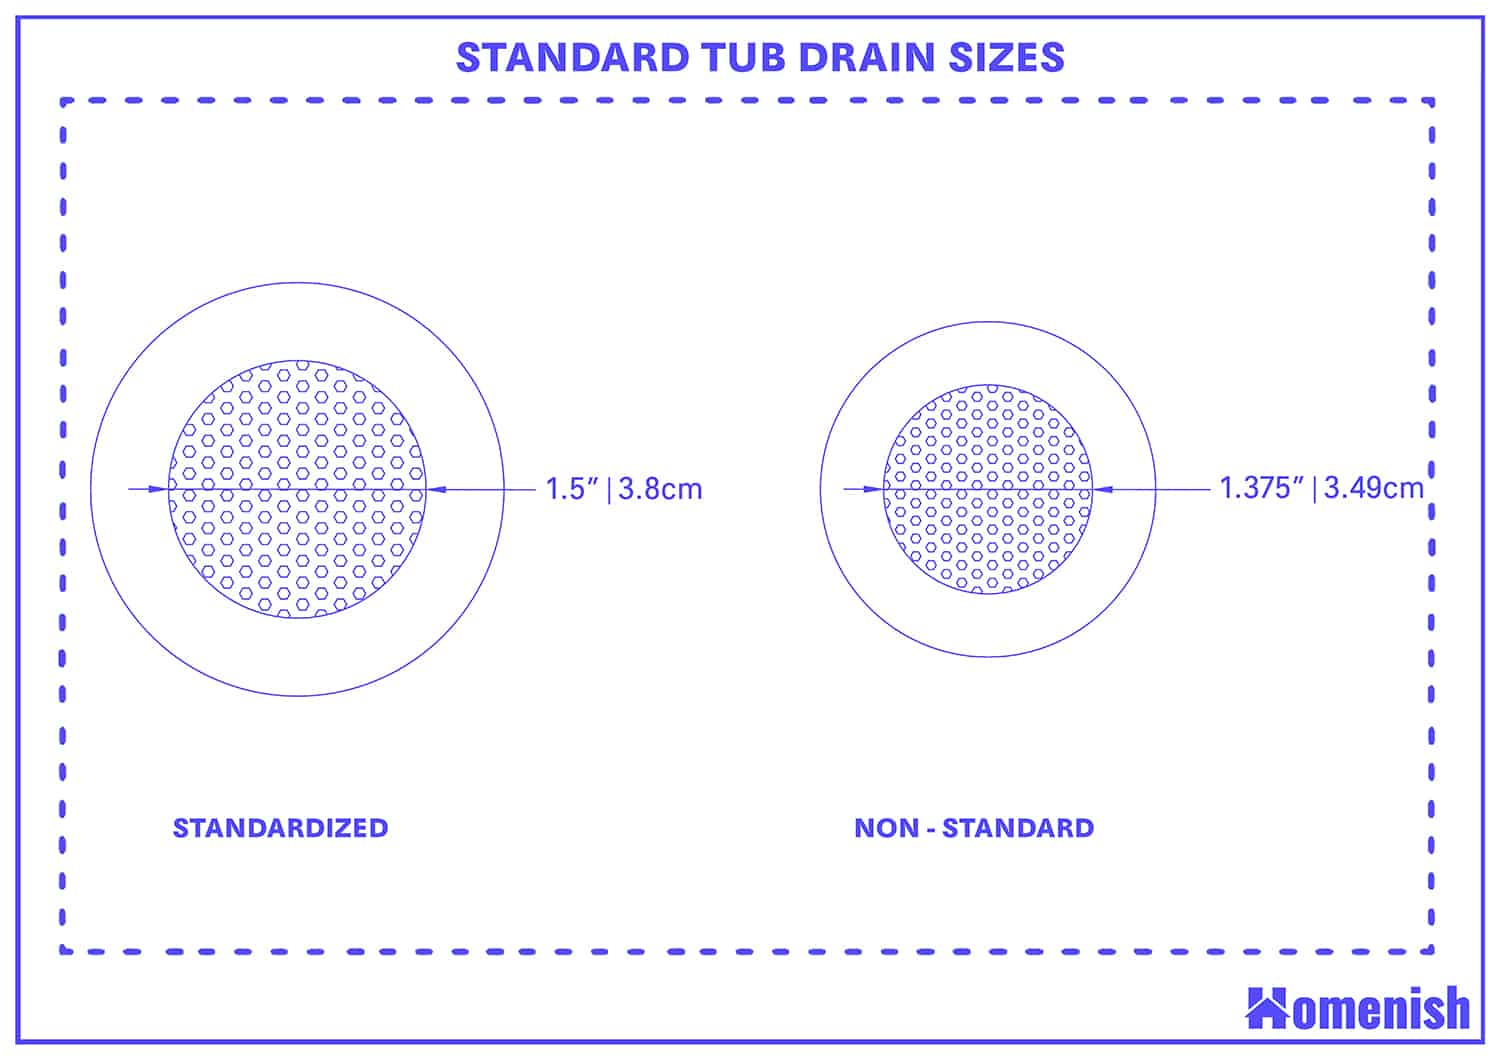 Standard tub drain sizes